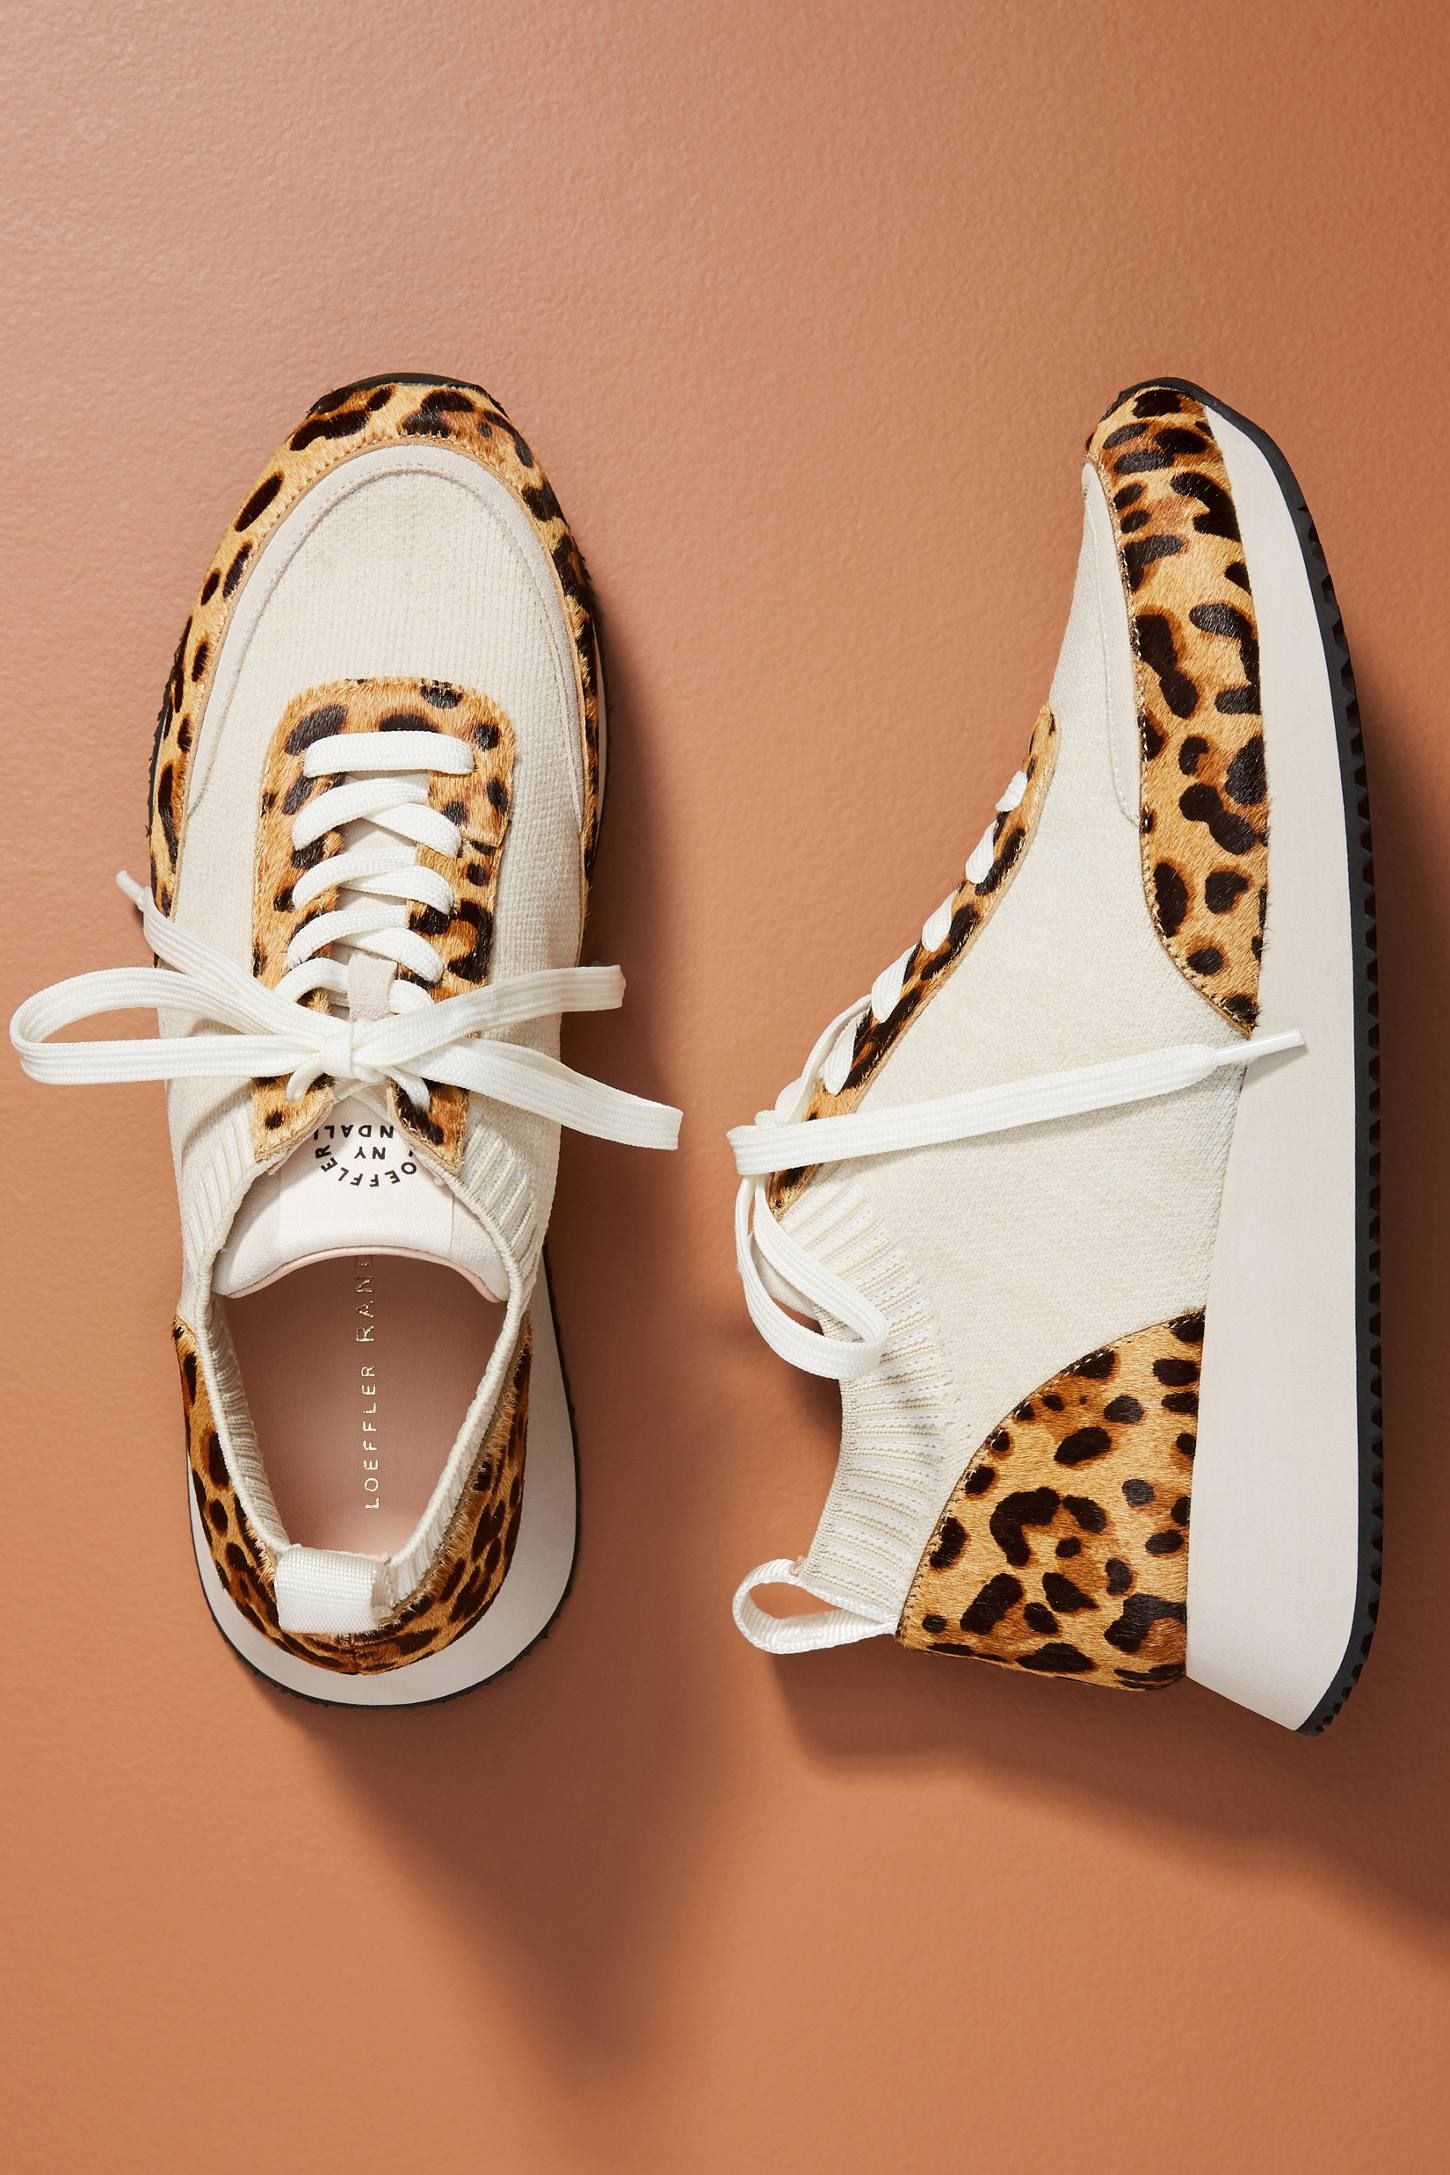 Buy Loeffler Randall Women's Logan-N Sneaker, Buff/Pink, 5 Medium US at  Amazon.in